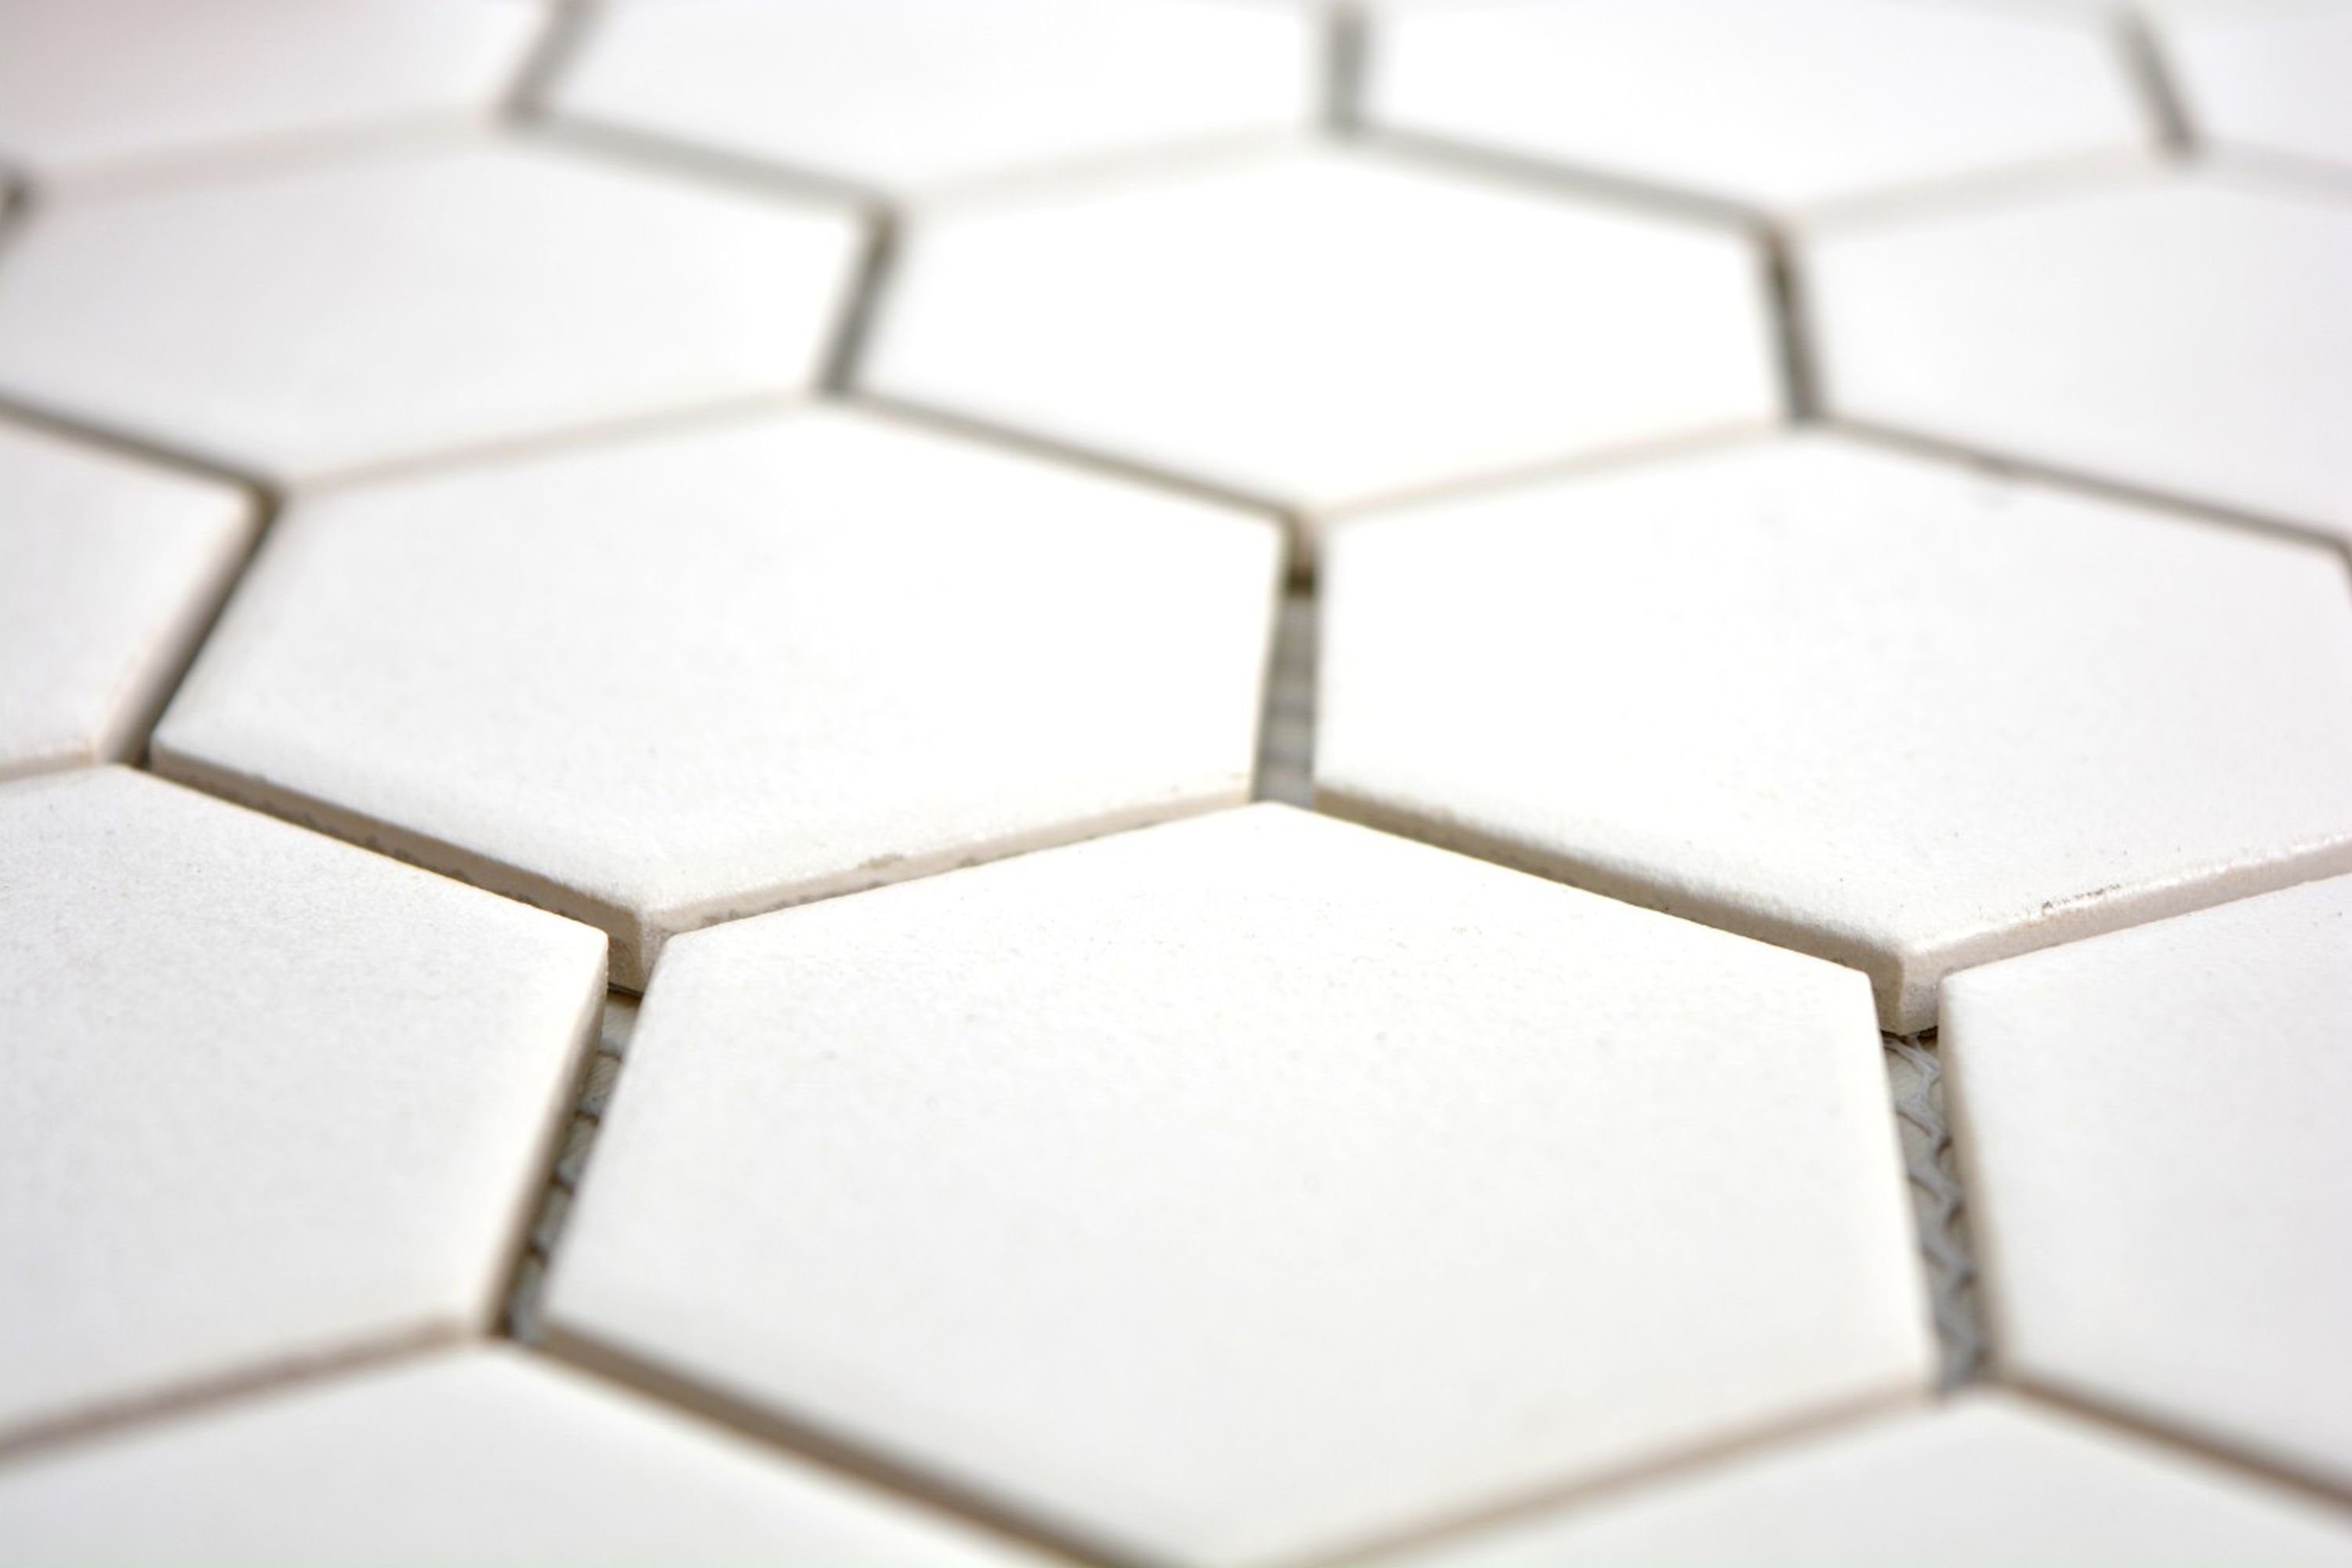 Bodenfliese rutschsicher Hexagonale Mosaik weiß Bodenfliese Keramik Fliese Mosani